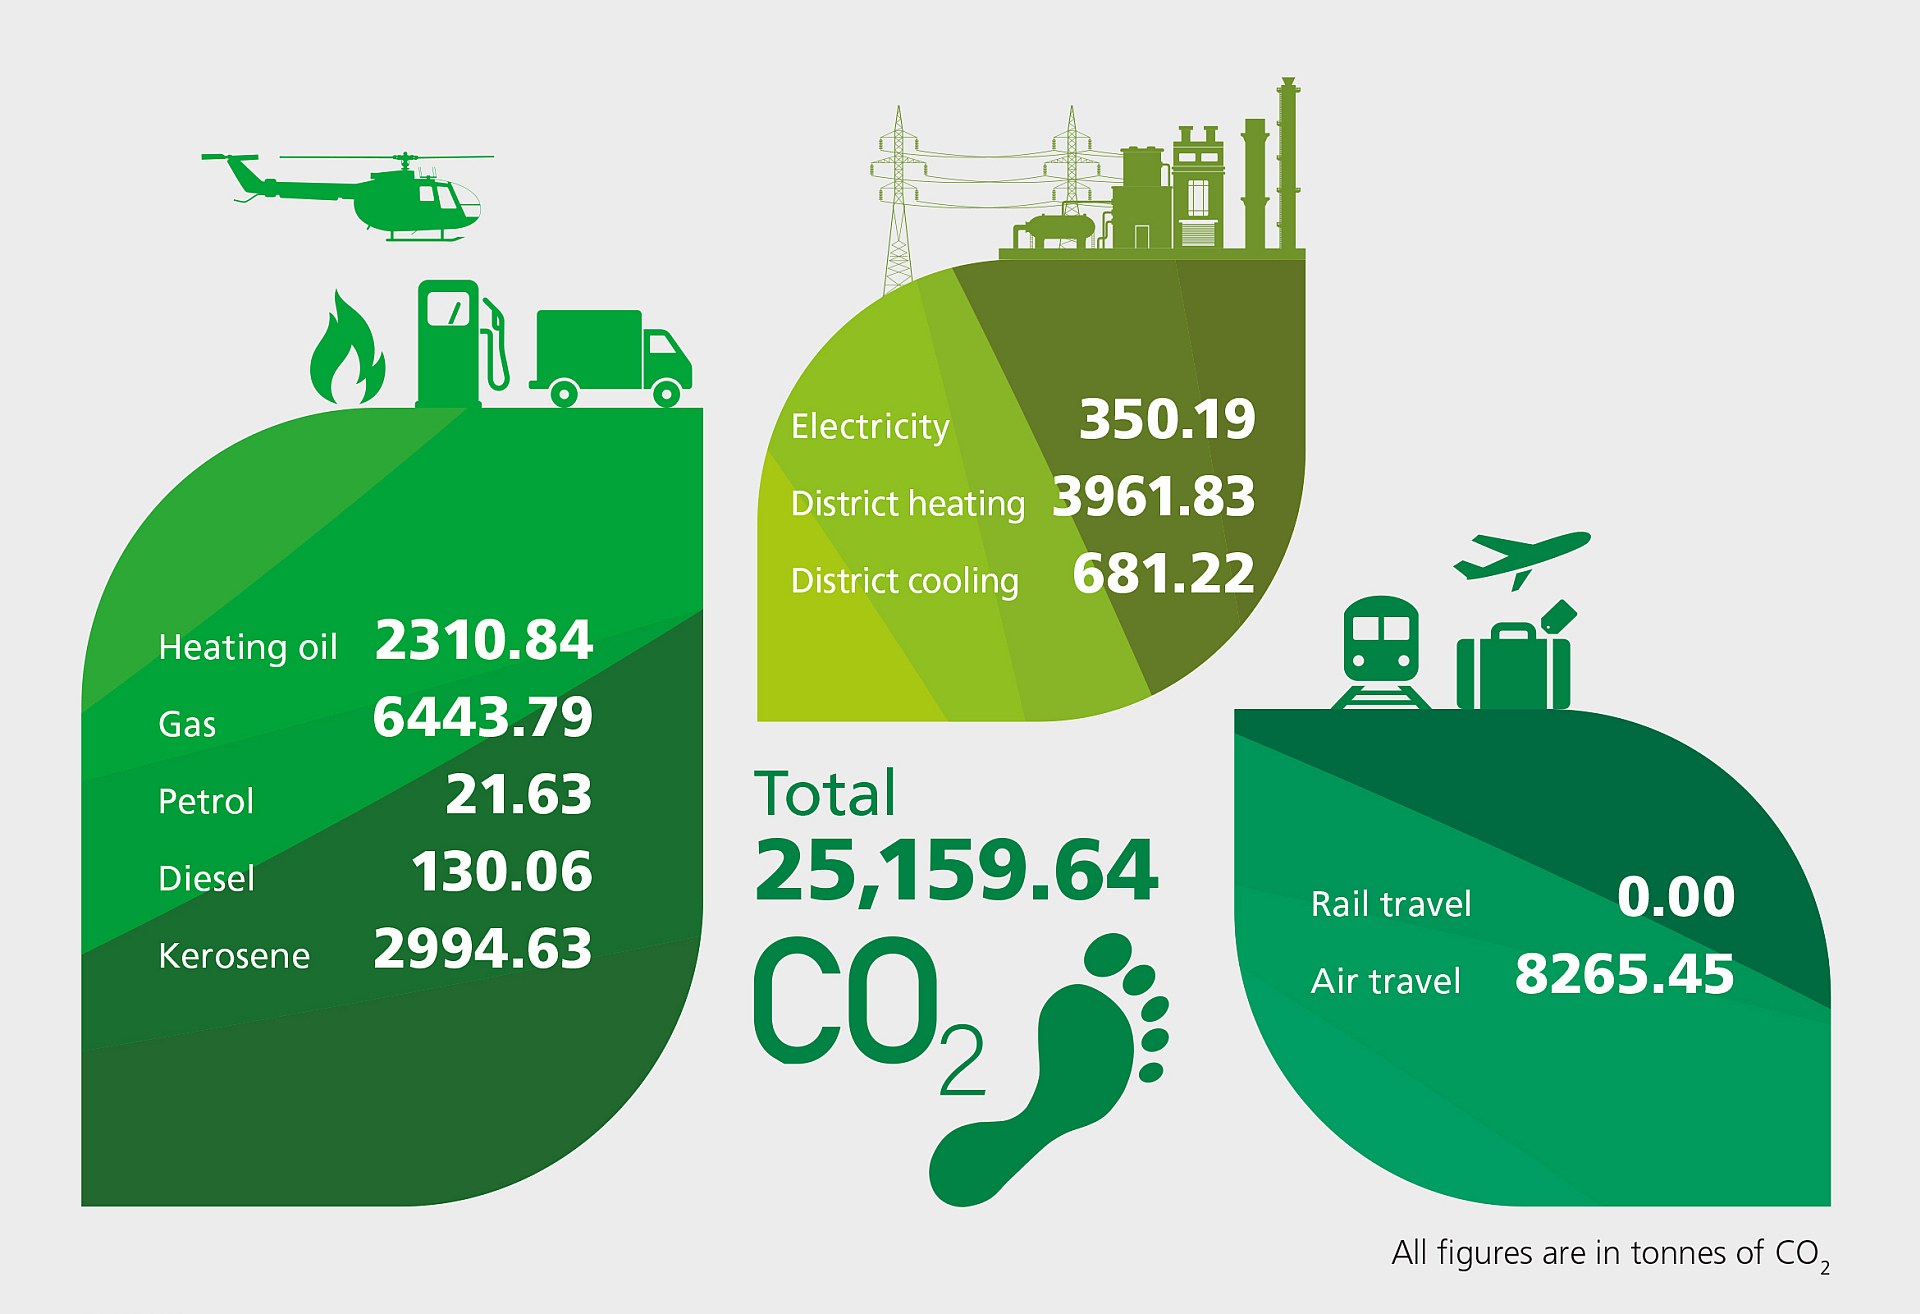 DLR’s carbon footprint